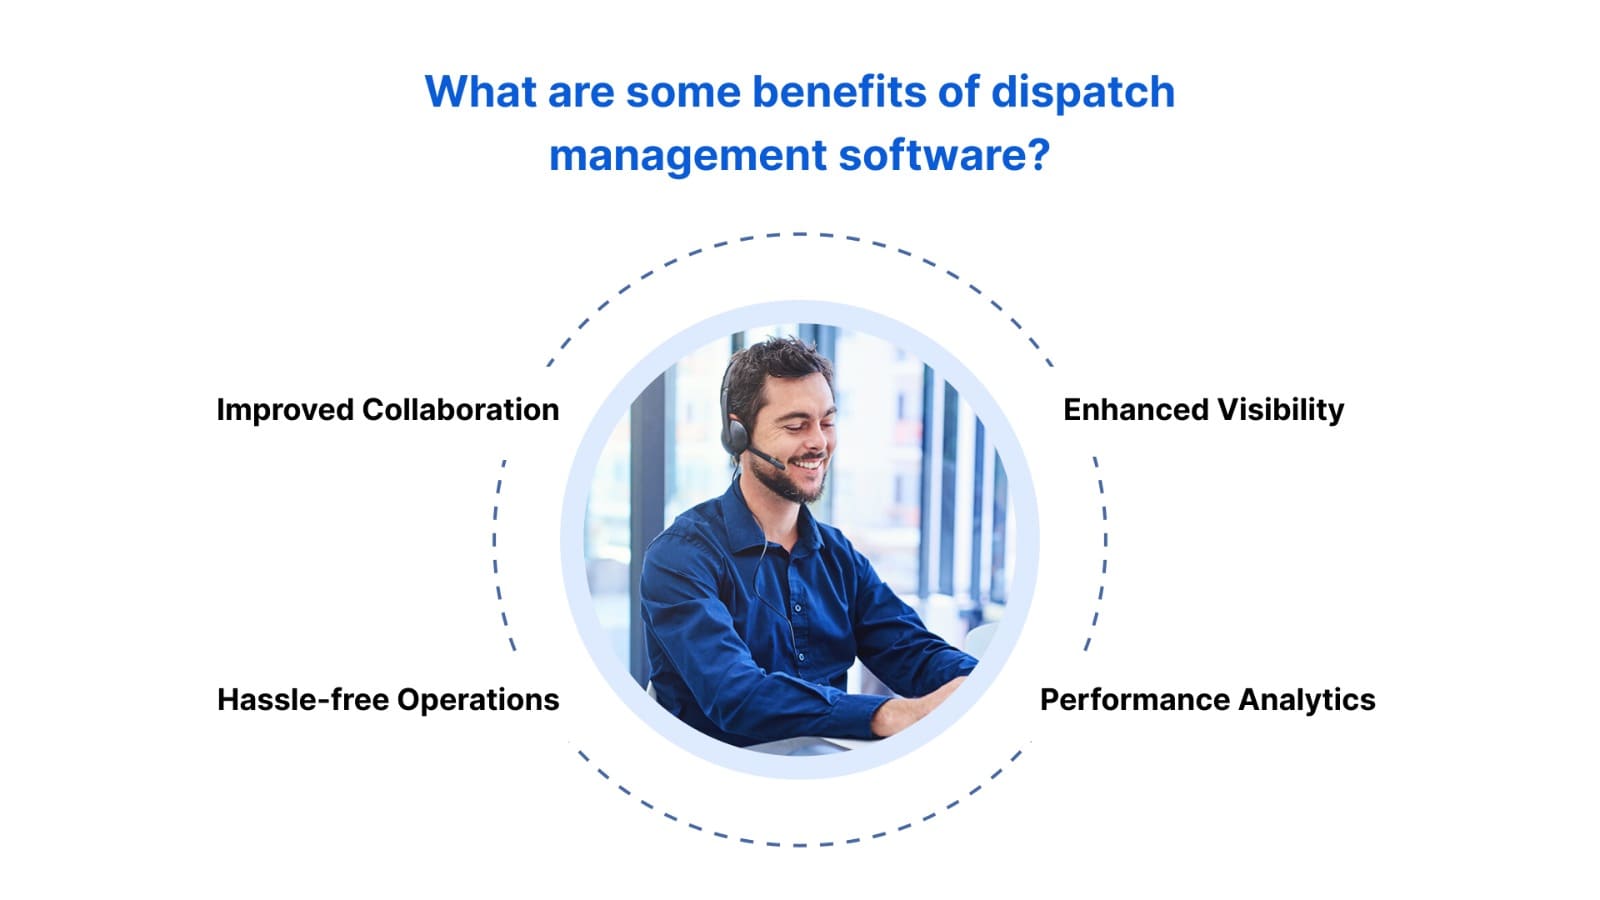 Dispatch management software benefits